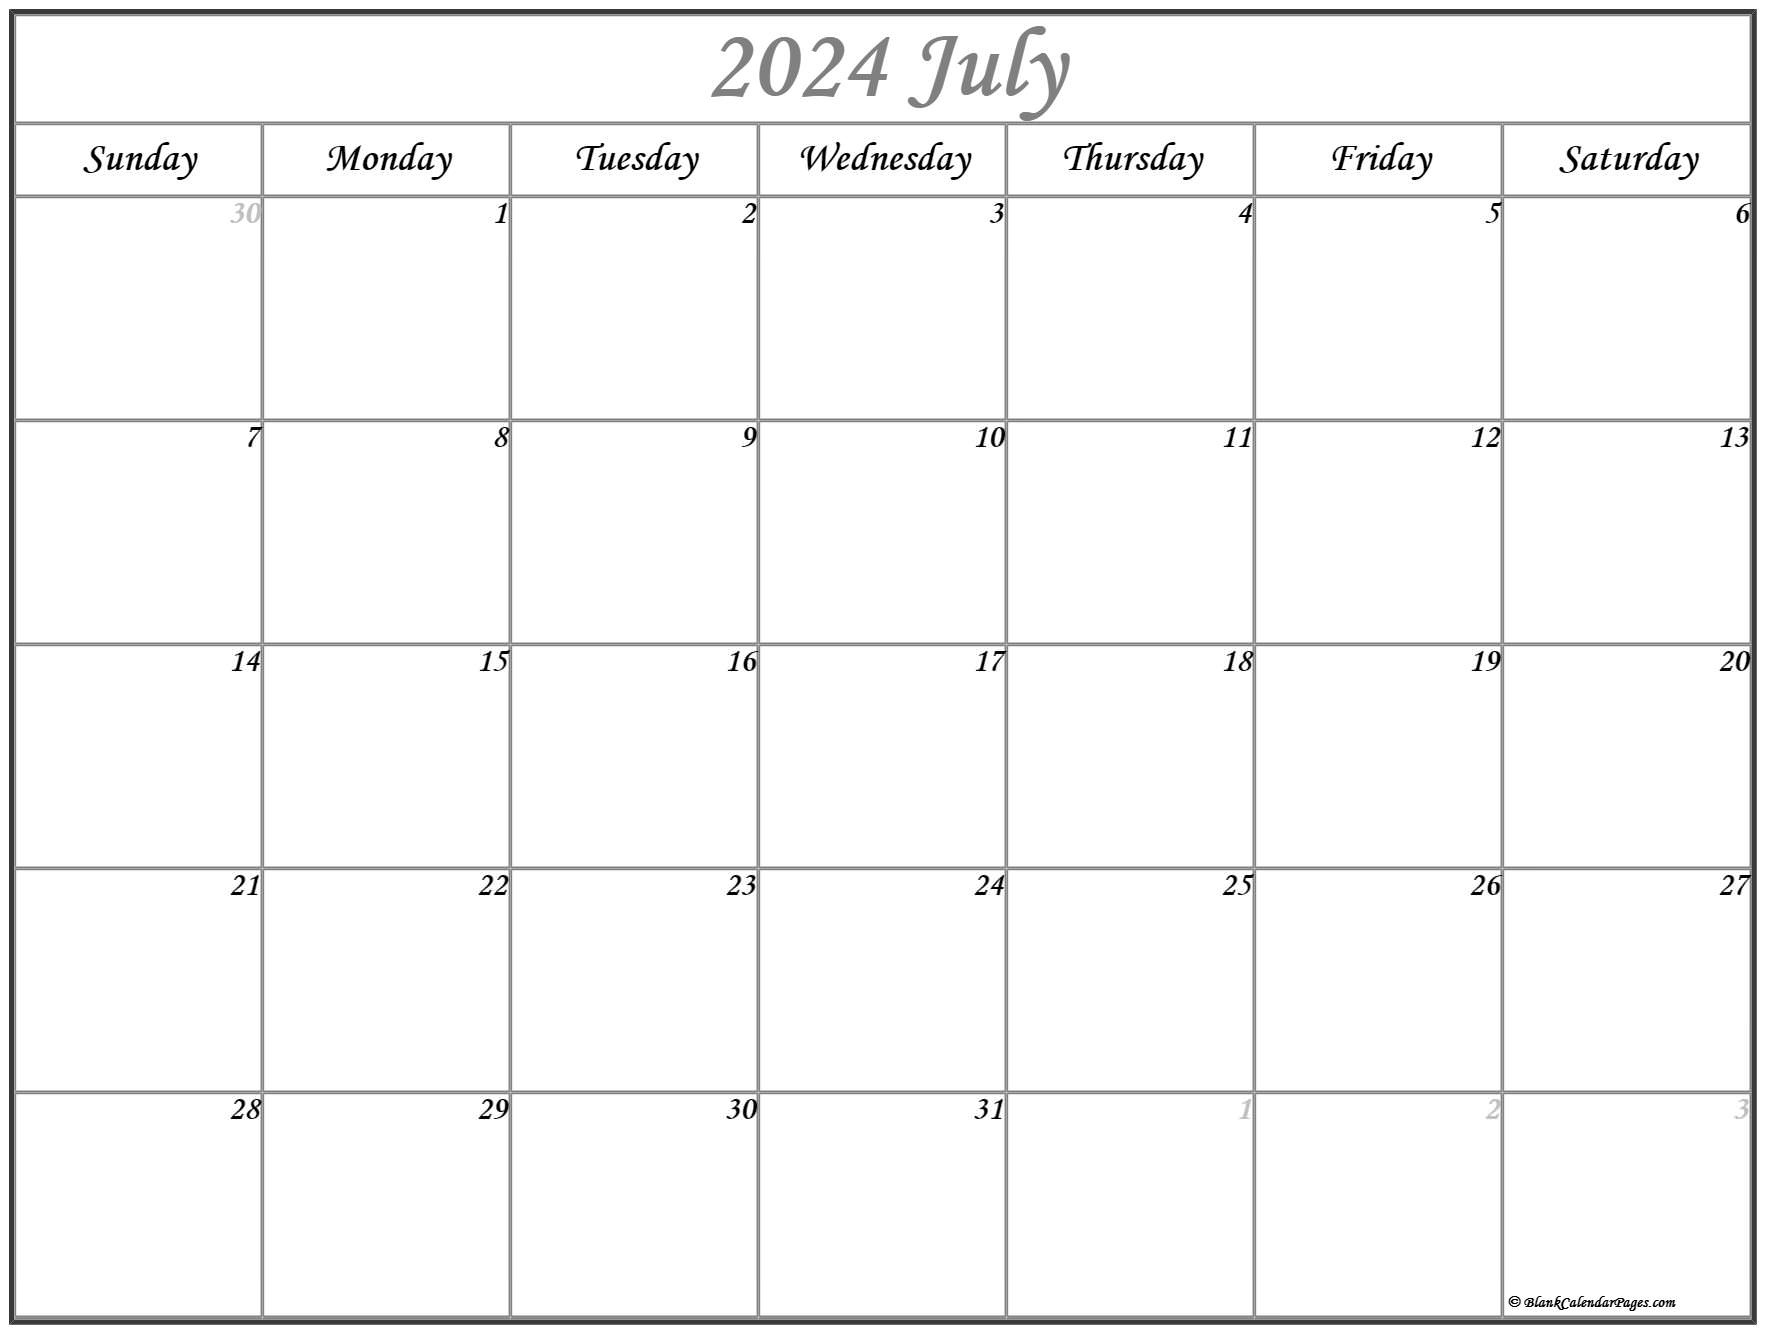 July 2024 Calendar | Free Printable Calendar with Open My Calendar For July 2024